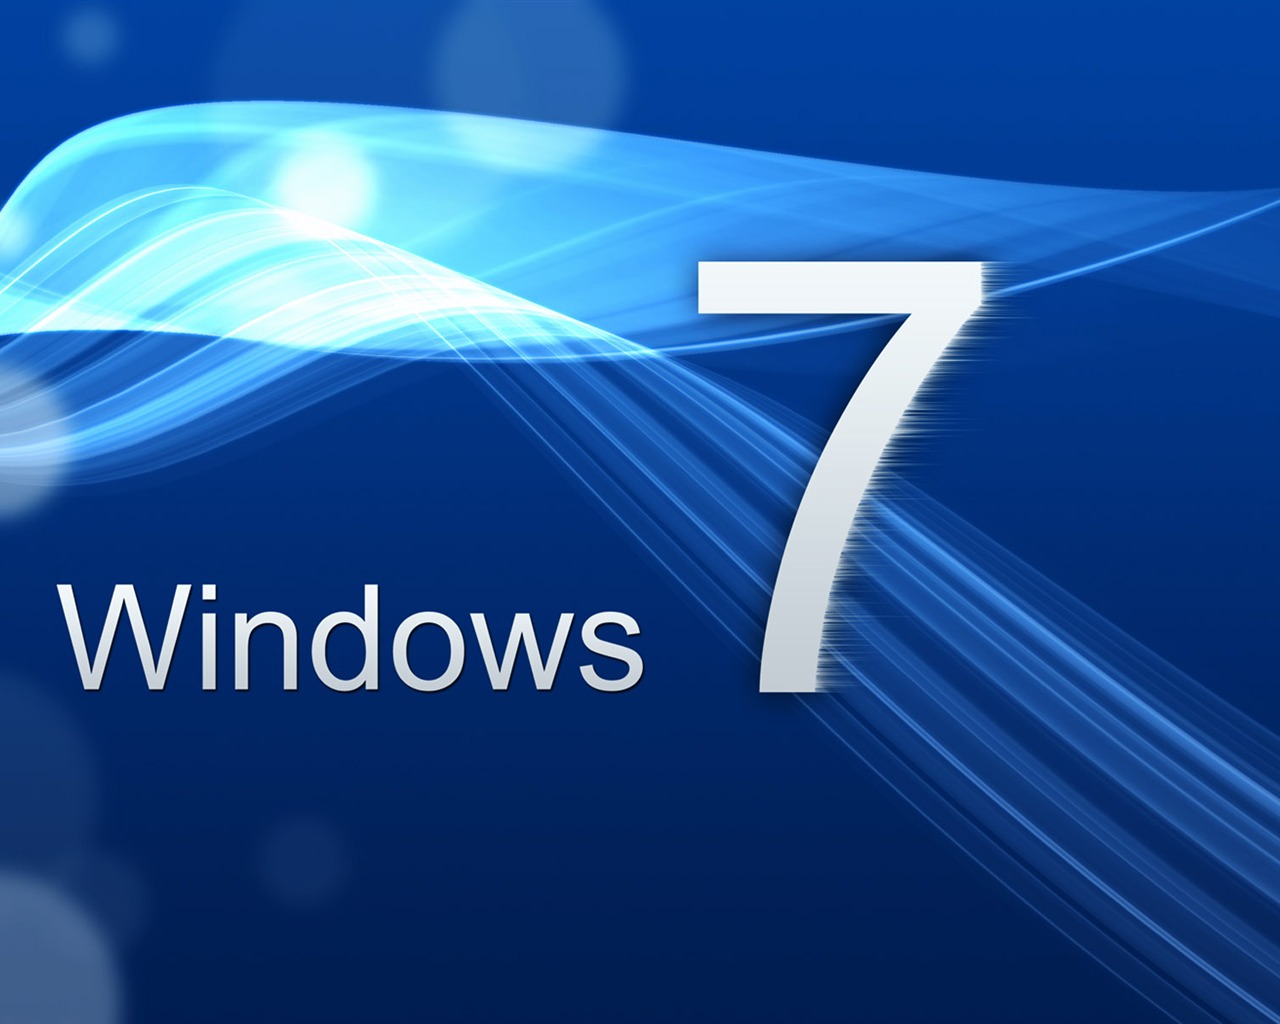 Windows7のテーマの壁紙 2 1 1280x1024 壁紙ダウンロード Windows7のテーマの壁紙 2 システム 壁紙 V3の壁紙